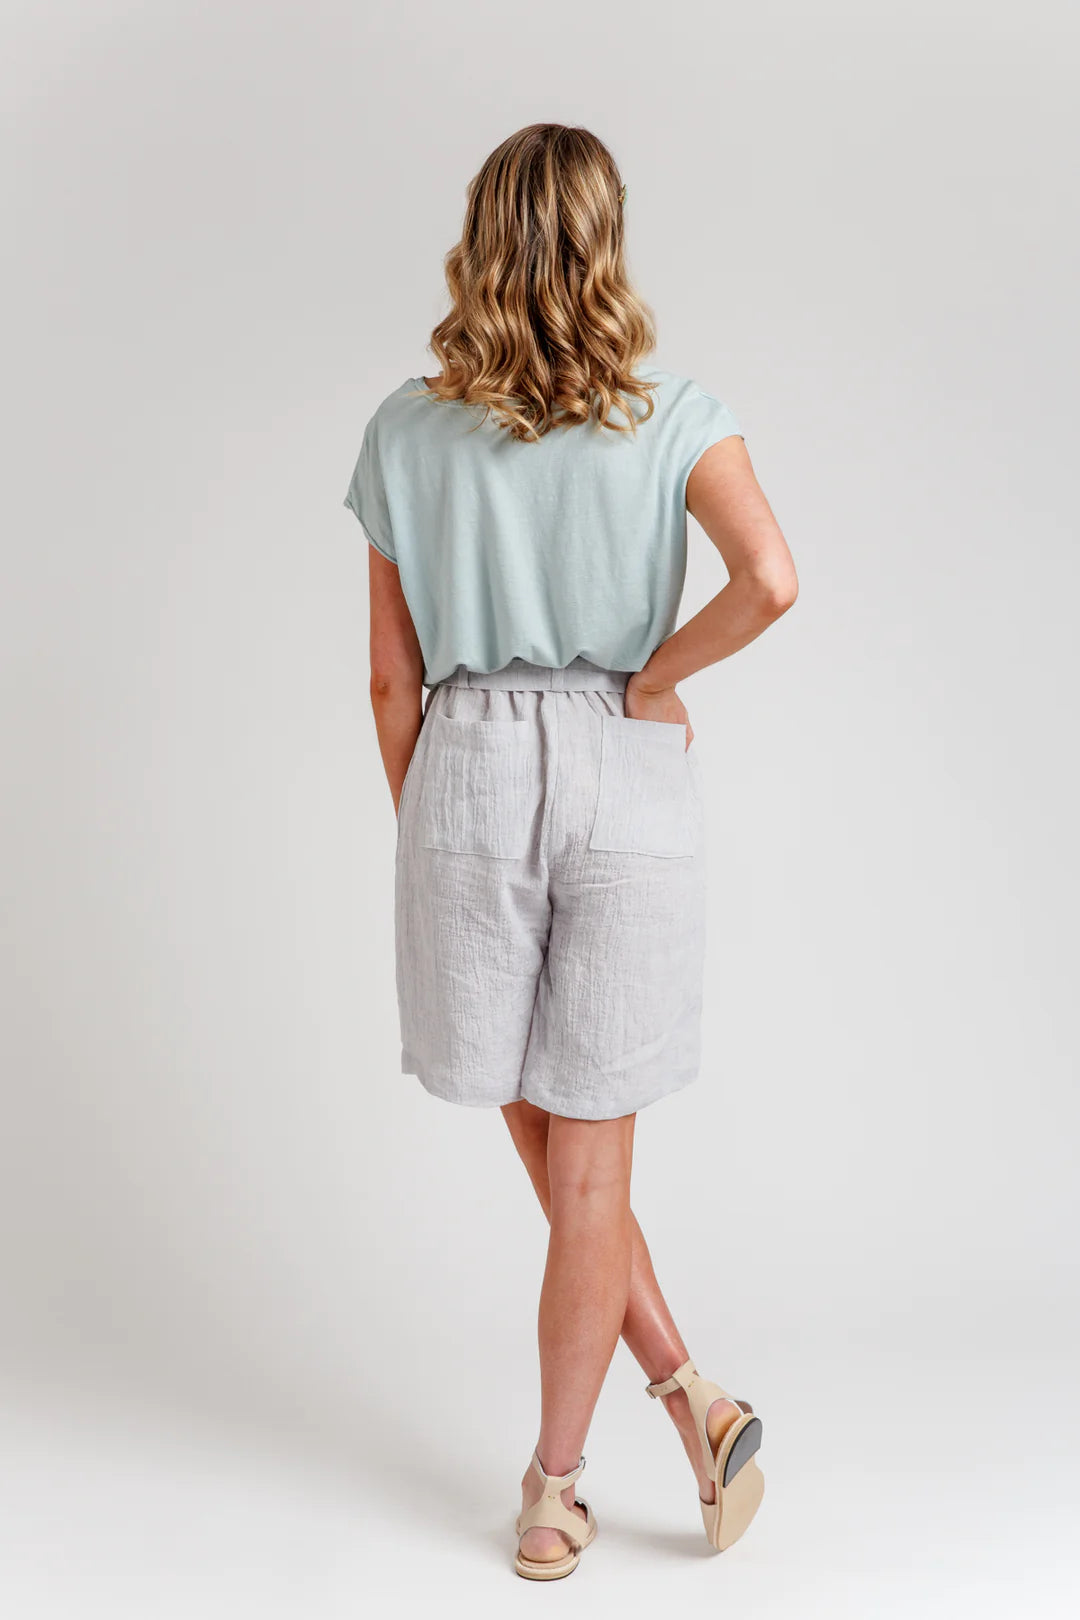 Megan Nielsen - Opal Pants and Shorts Sewing Pattern